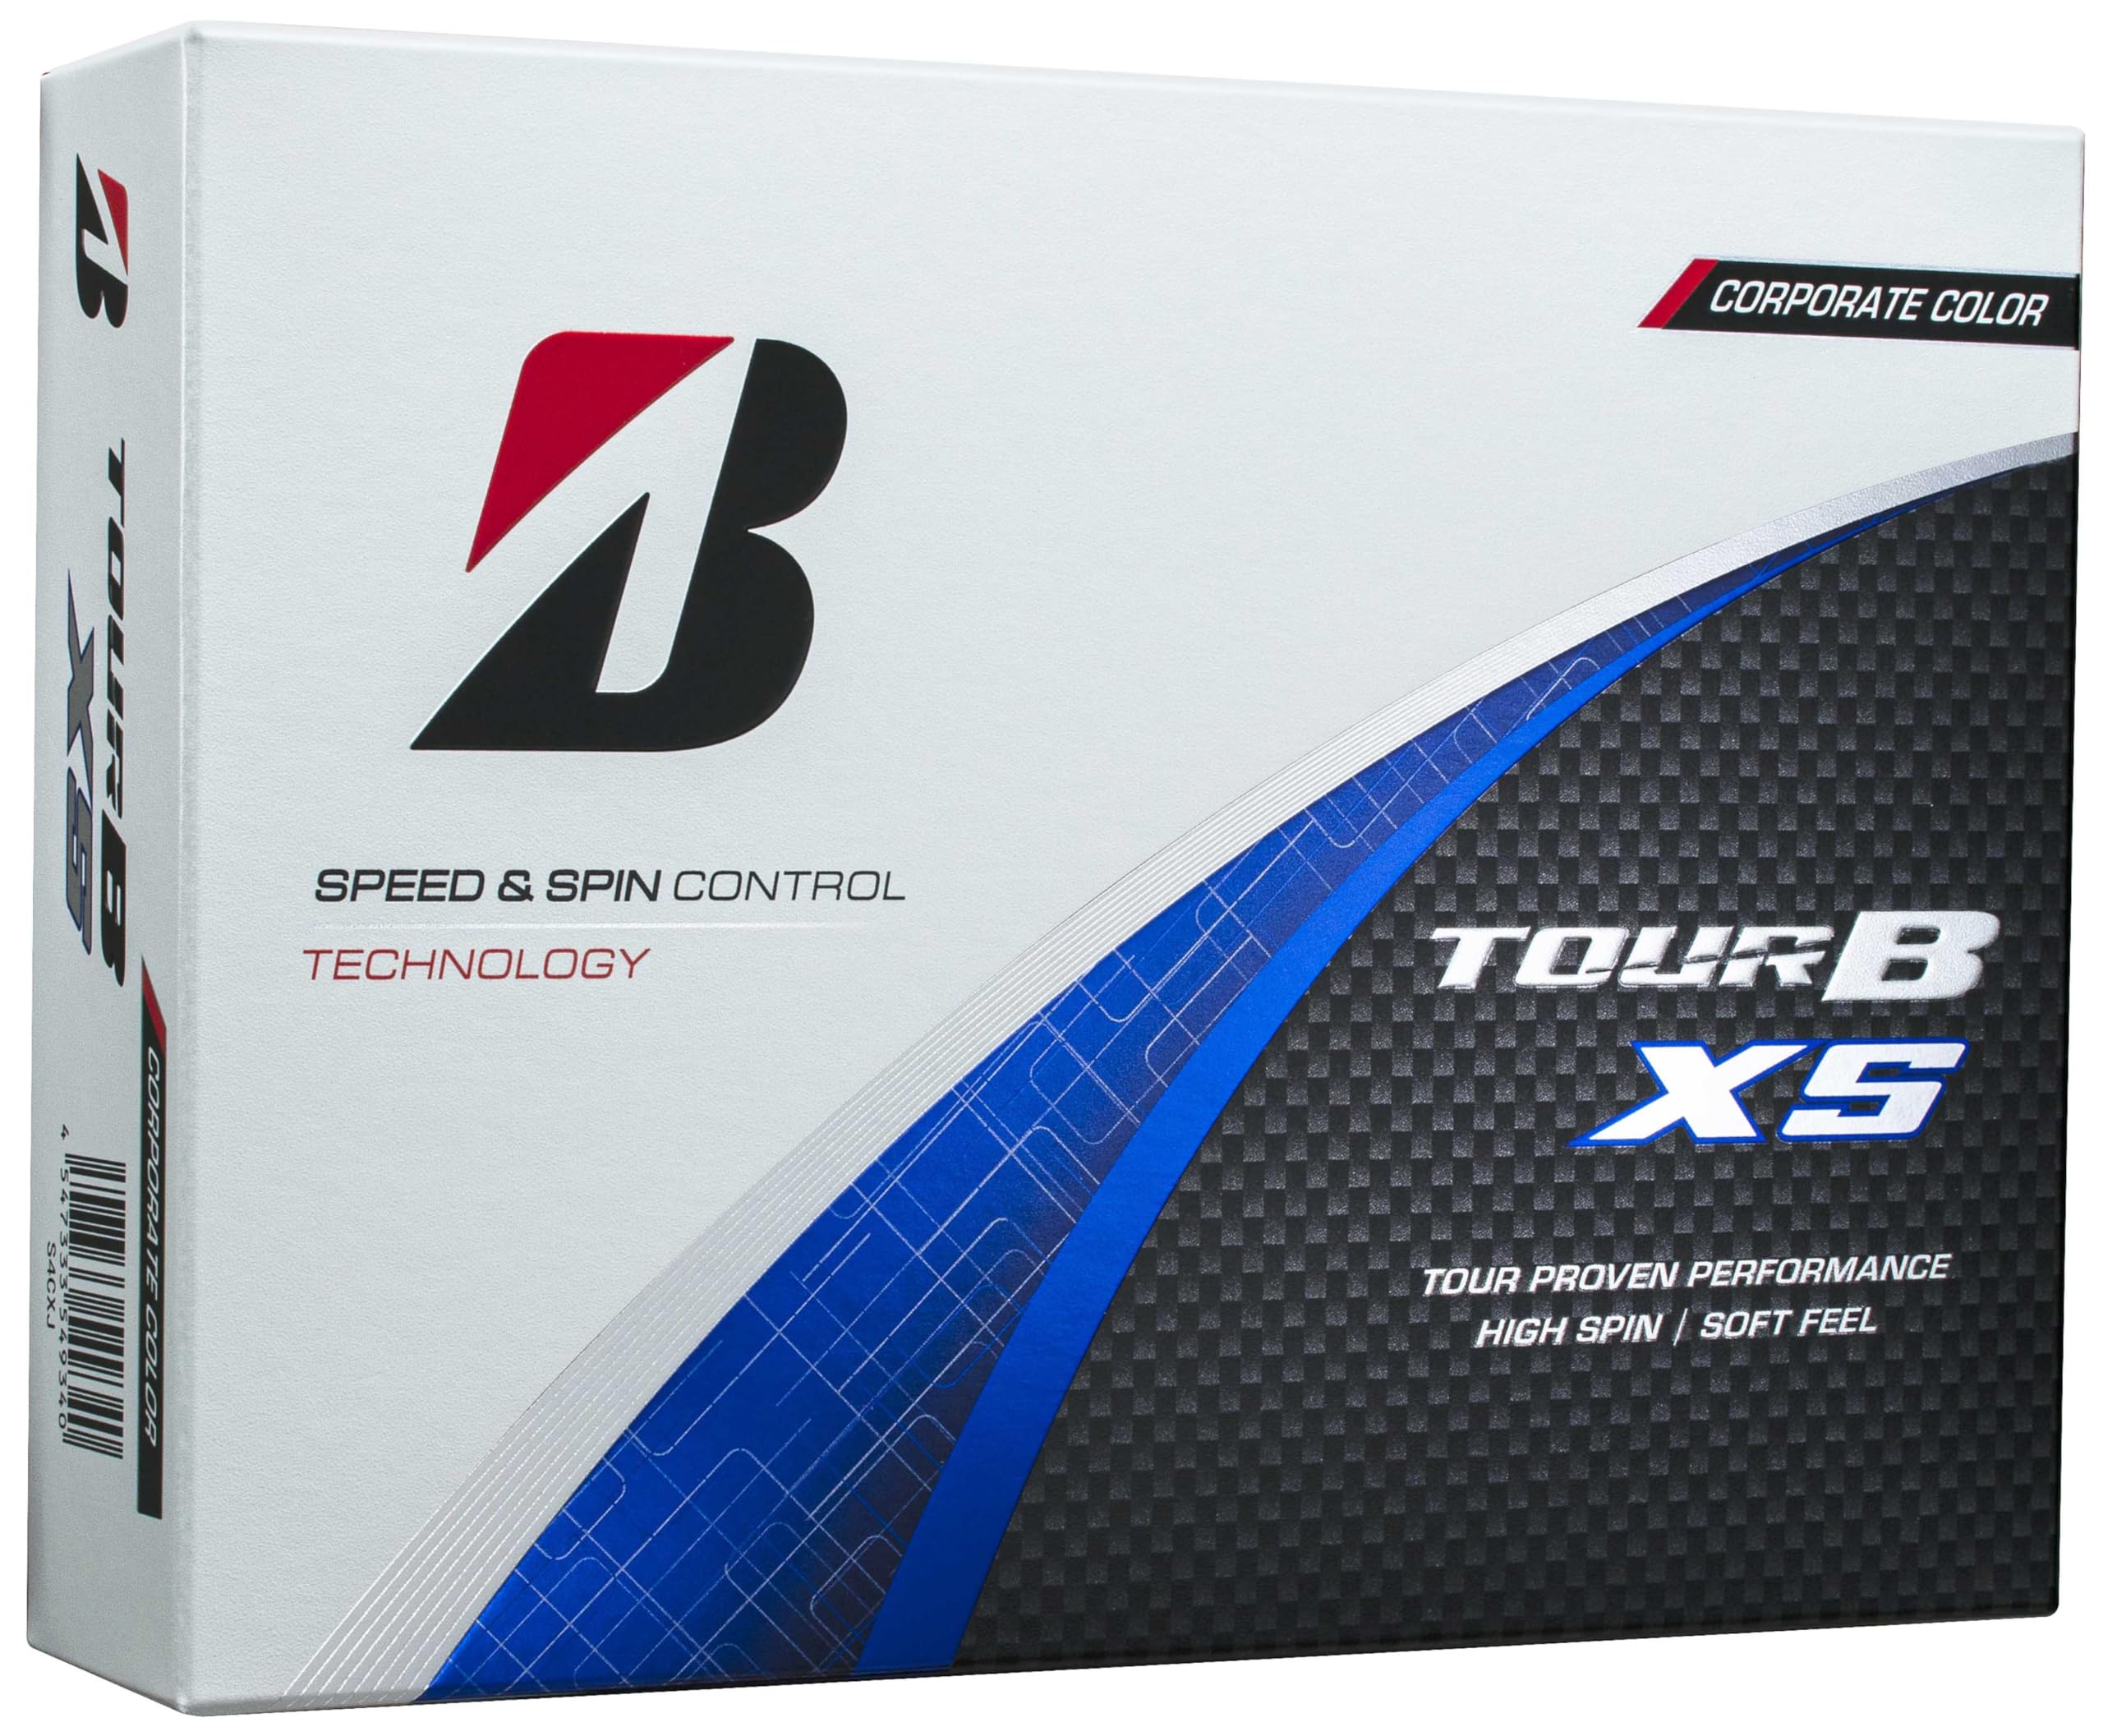 BRIDGESTONE(ブリヂストン)ゴルフボール TOUR B XS 2024年モデル 12球入 コーポレートカラー S4CXJ